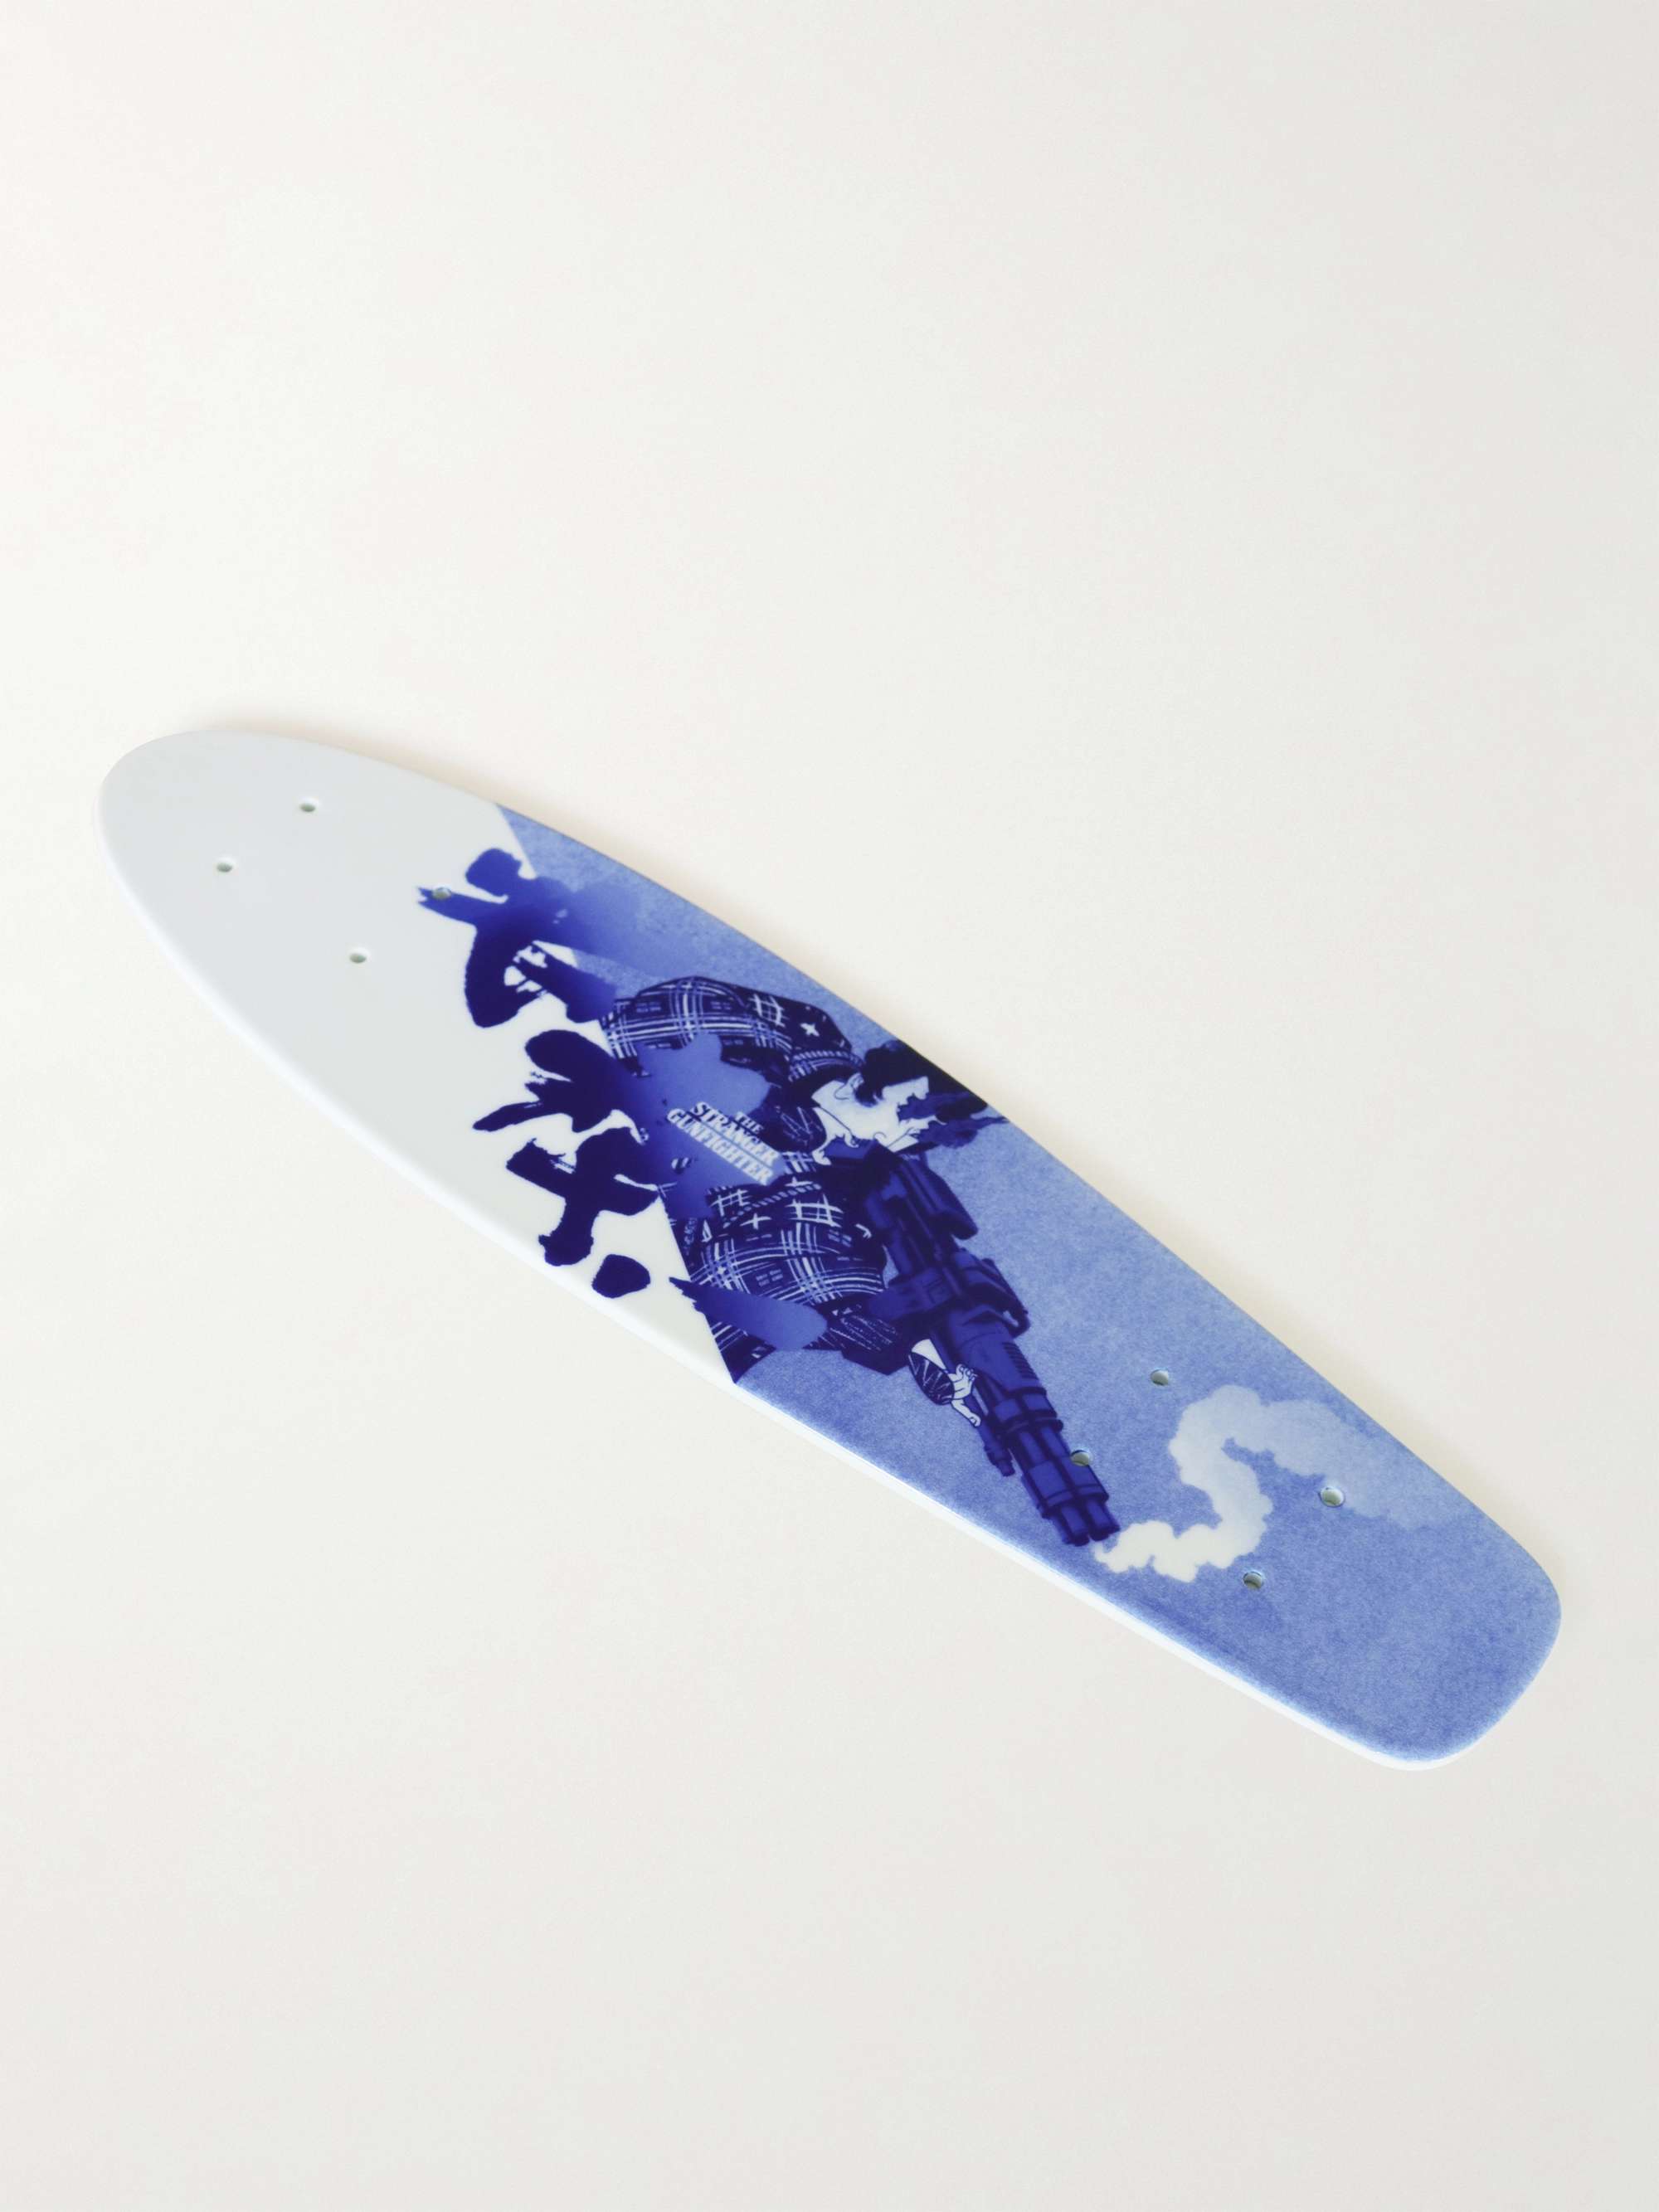 BY JAPAN + Maruhiro + BAR BAR + Evisen Dirty Evitaro Porcelain Skateboard